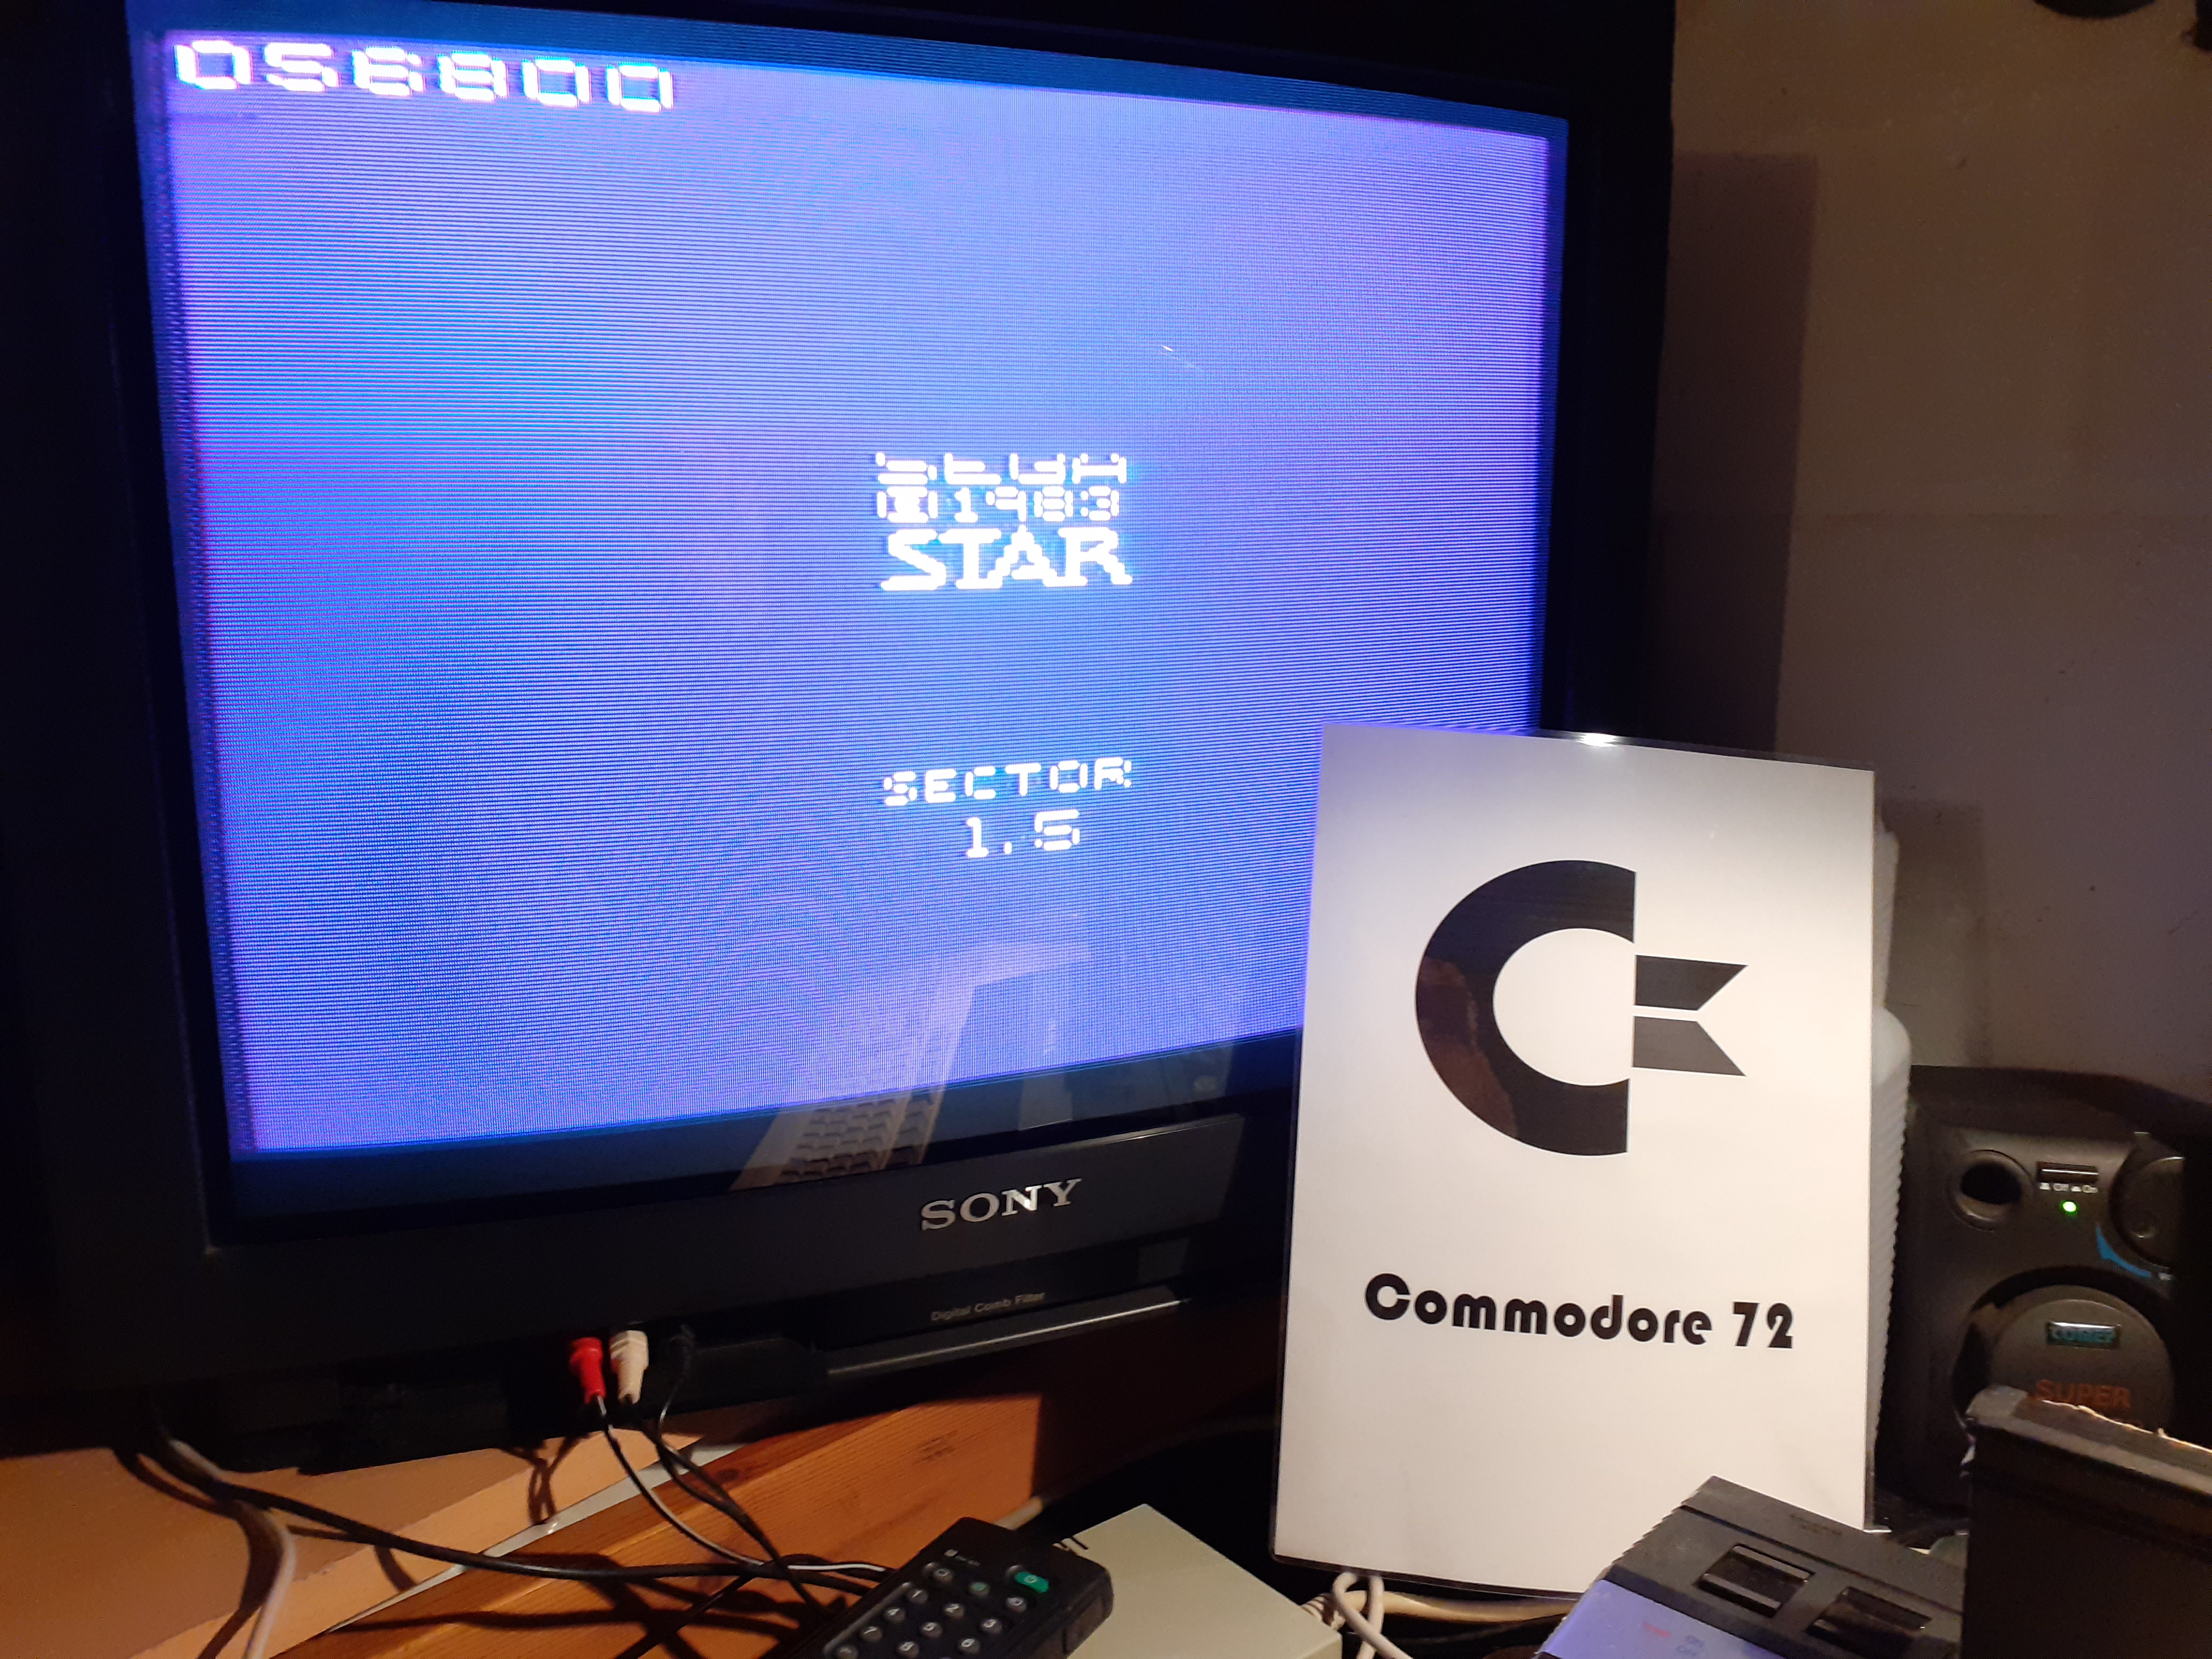 Commodore72: Star Trek (Atari 2600 Novice/B) 56,800 points on 2019-11-21 14:00:55